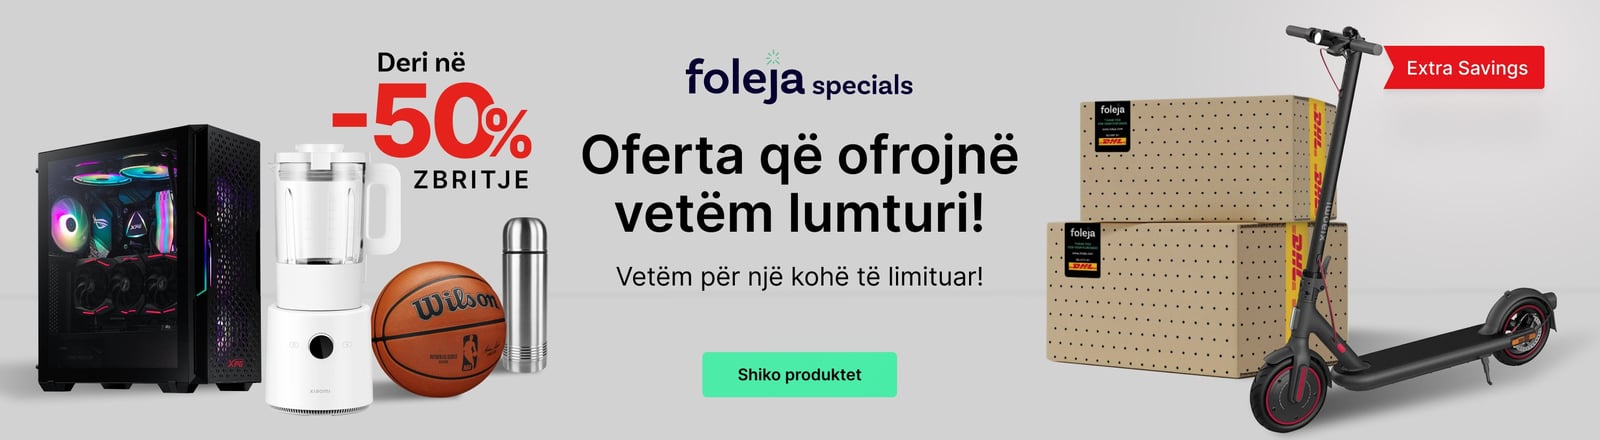 Banner-foleja-special-web